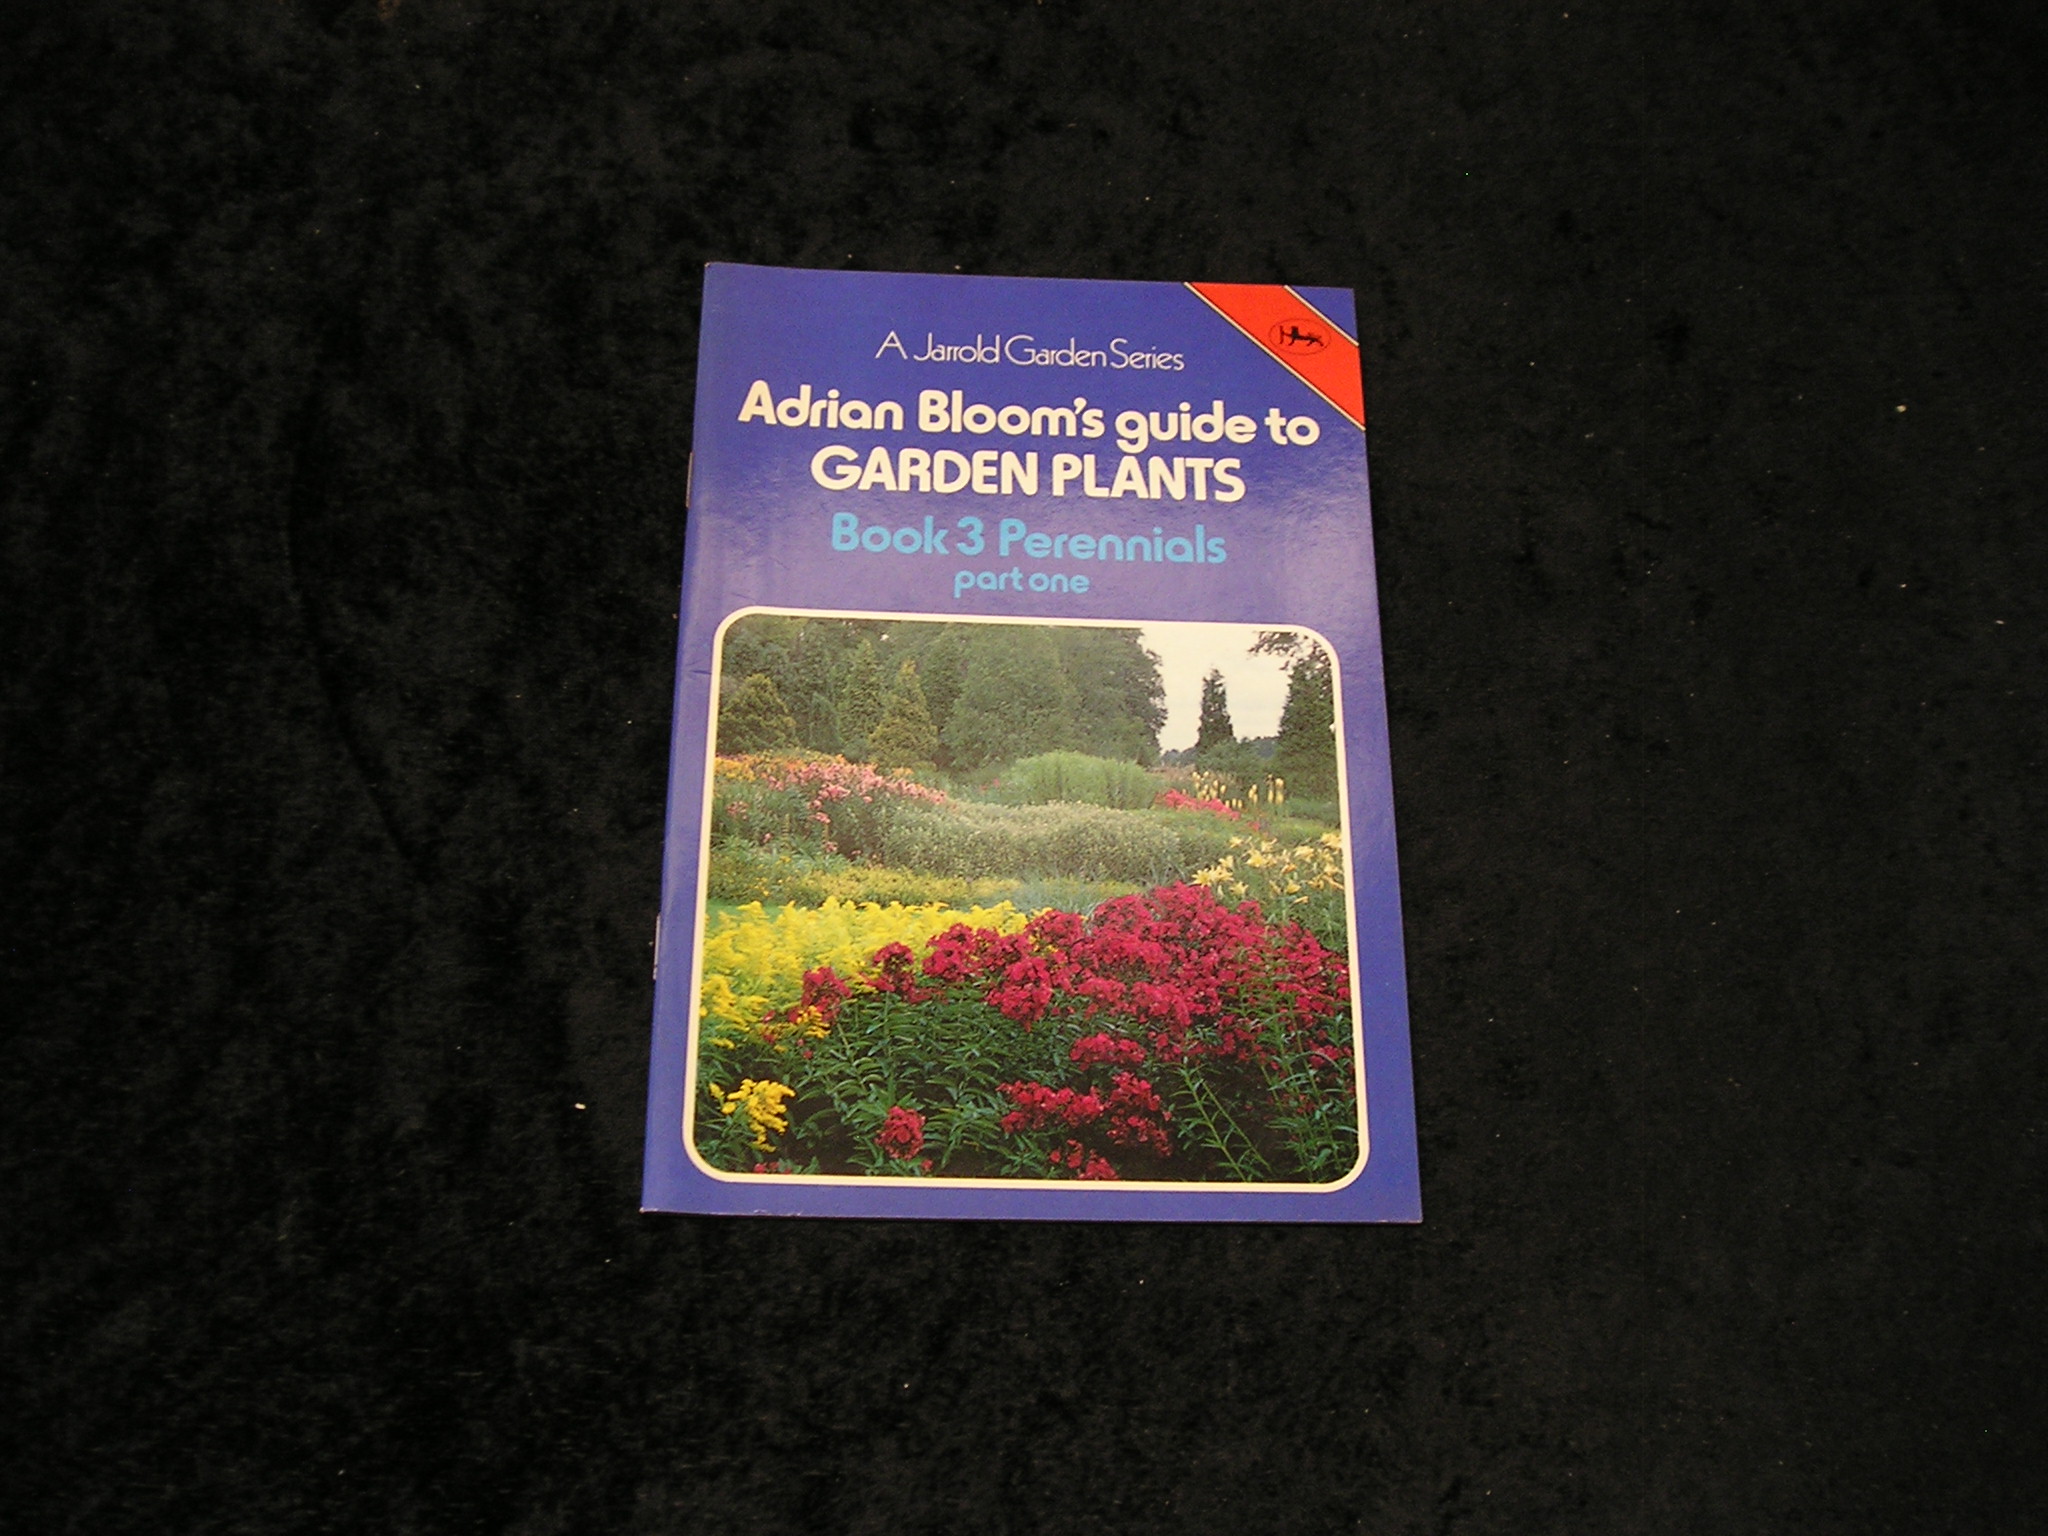 Adrian Bloom's guide to Garden Plants: Book 3 Perennials part one